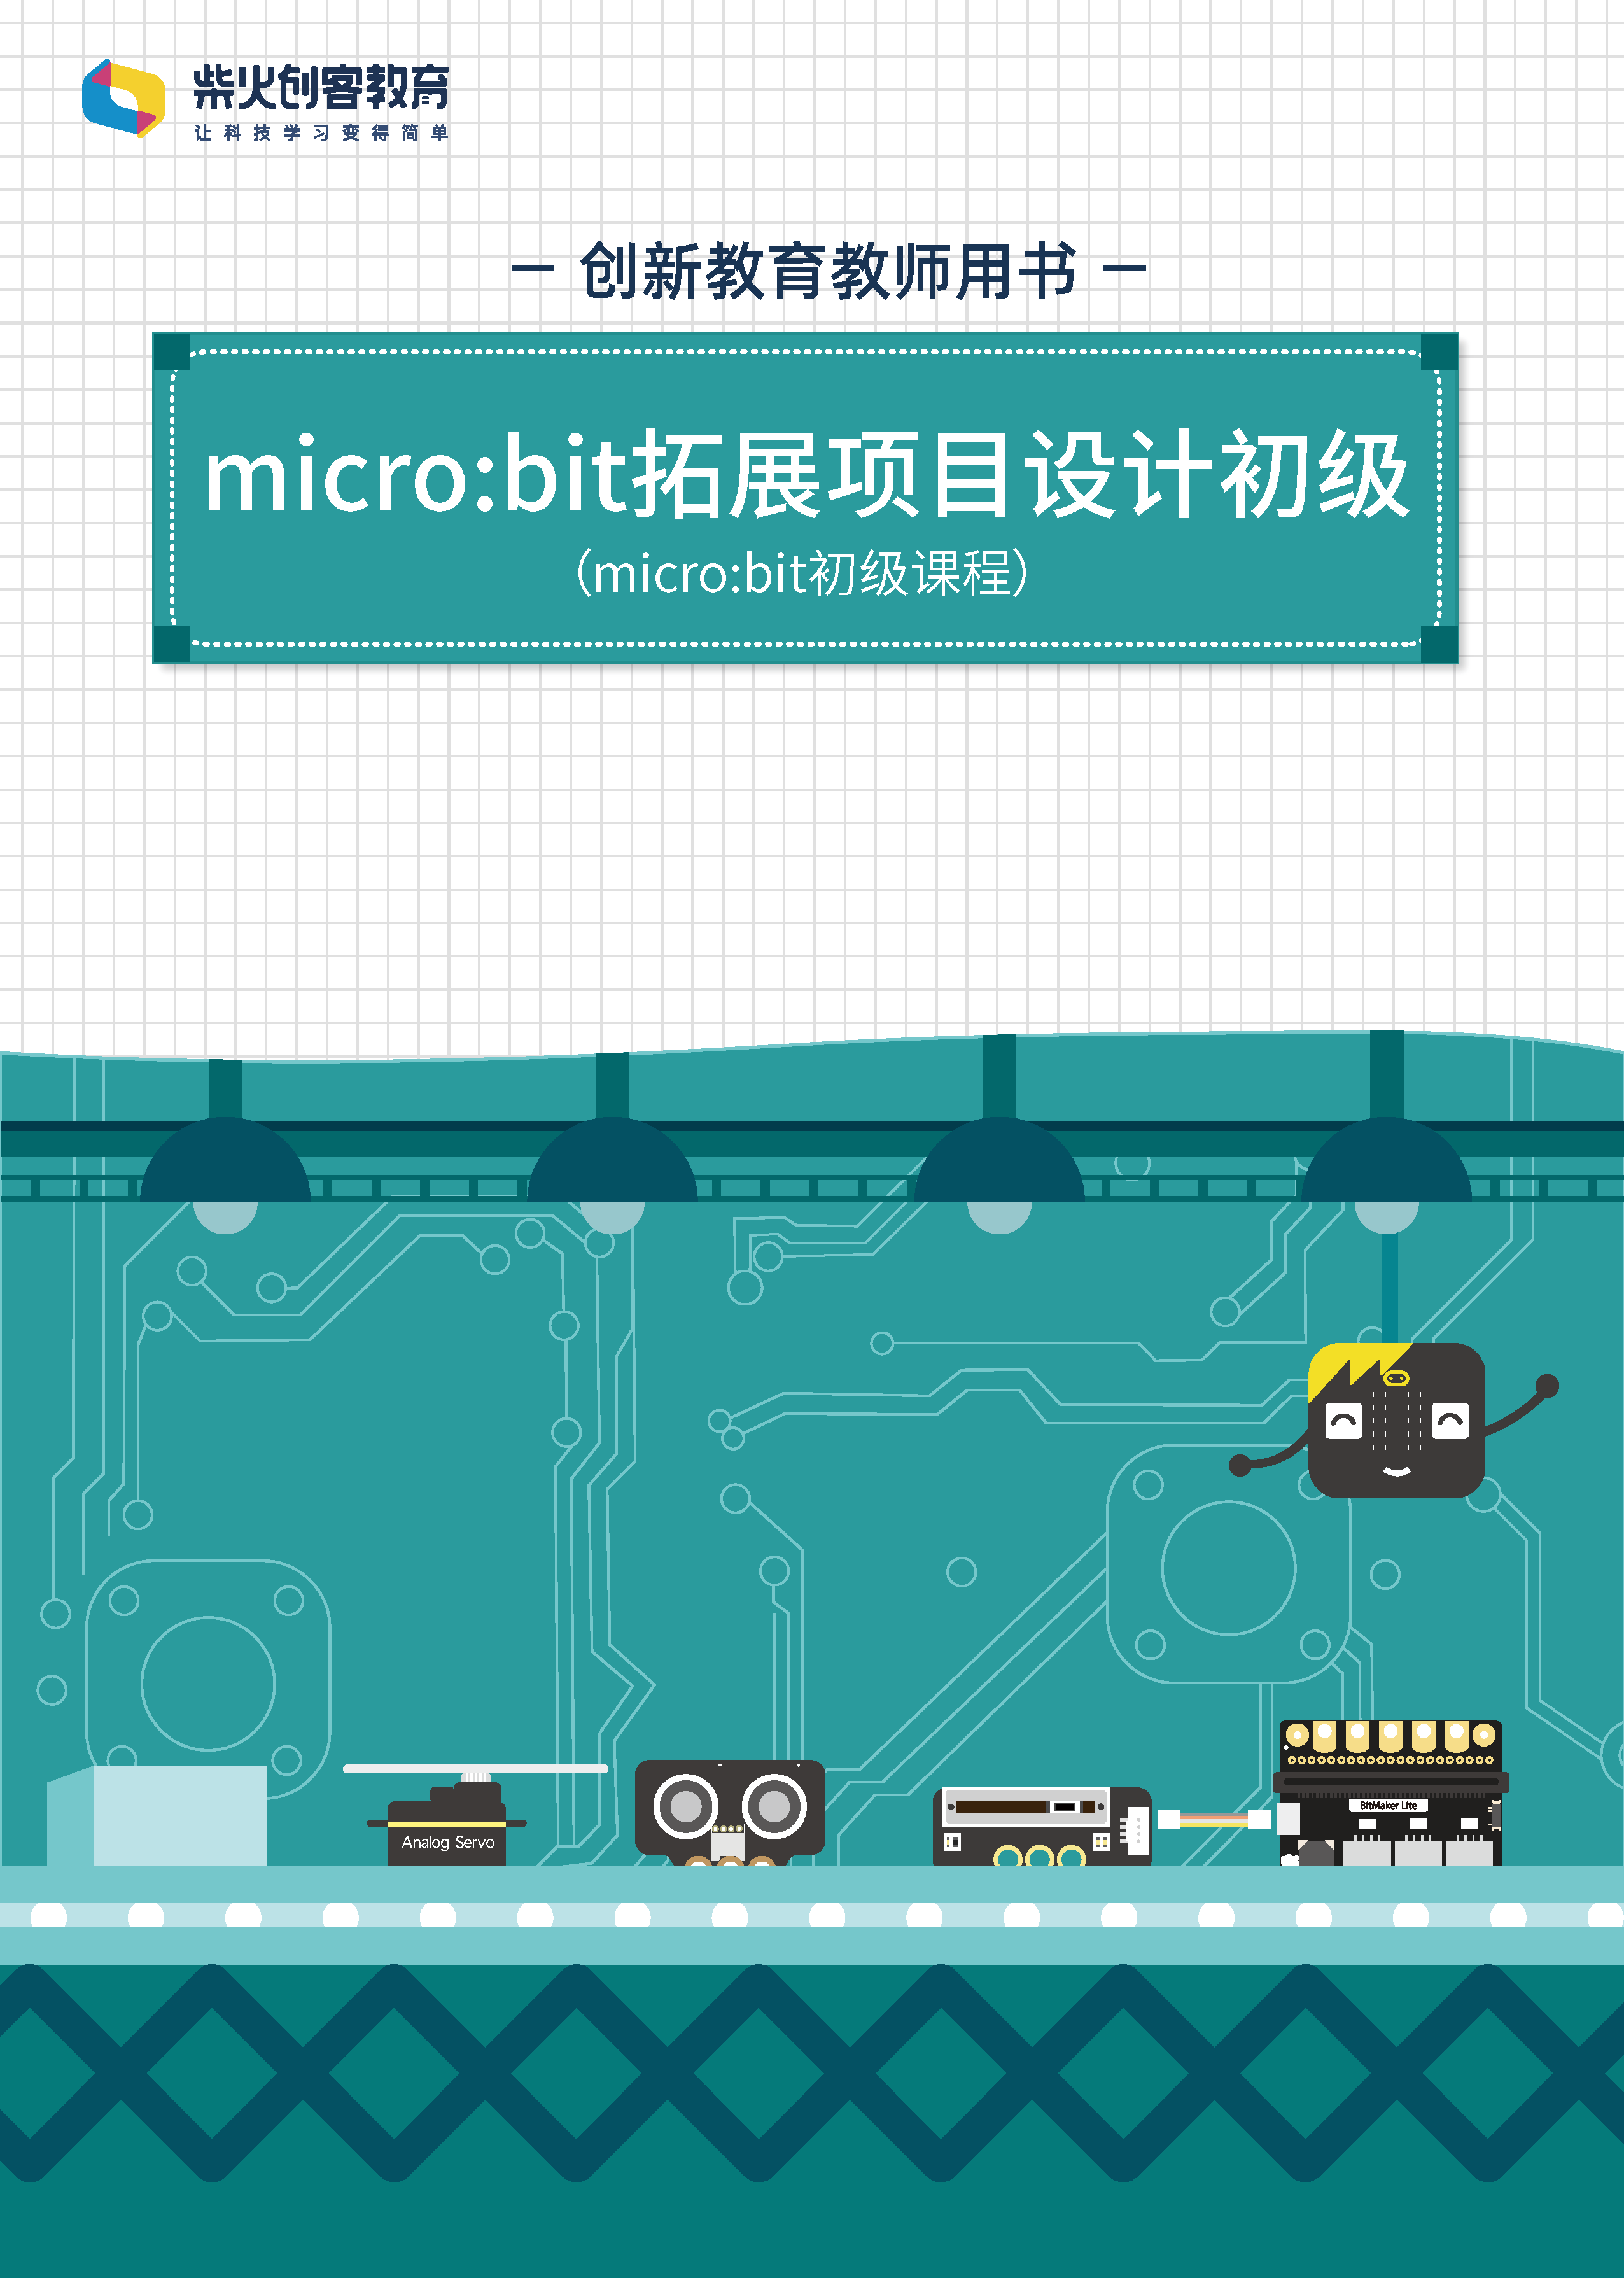 microbit-初级课程书籍封面_页面_4